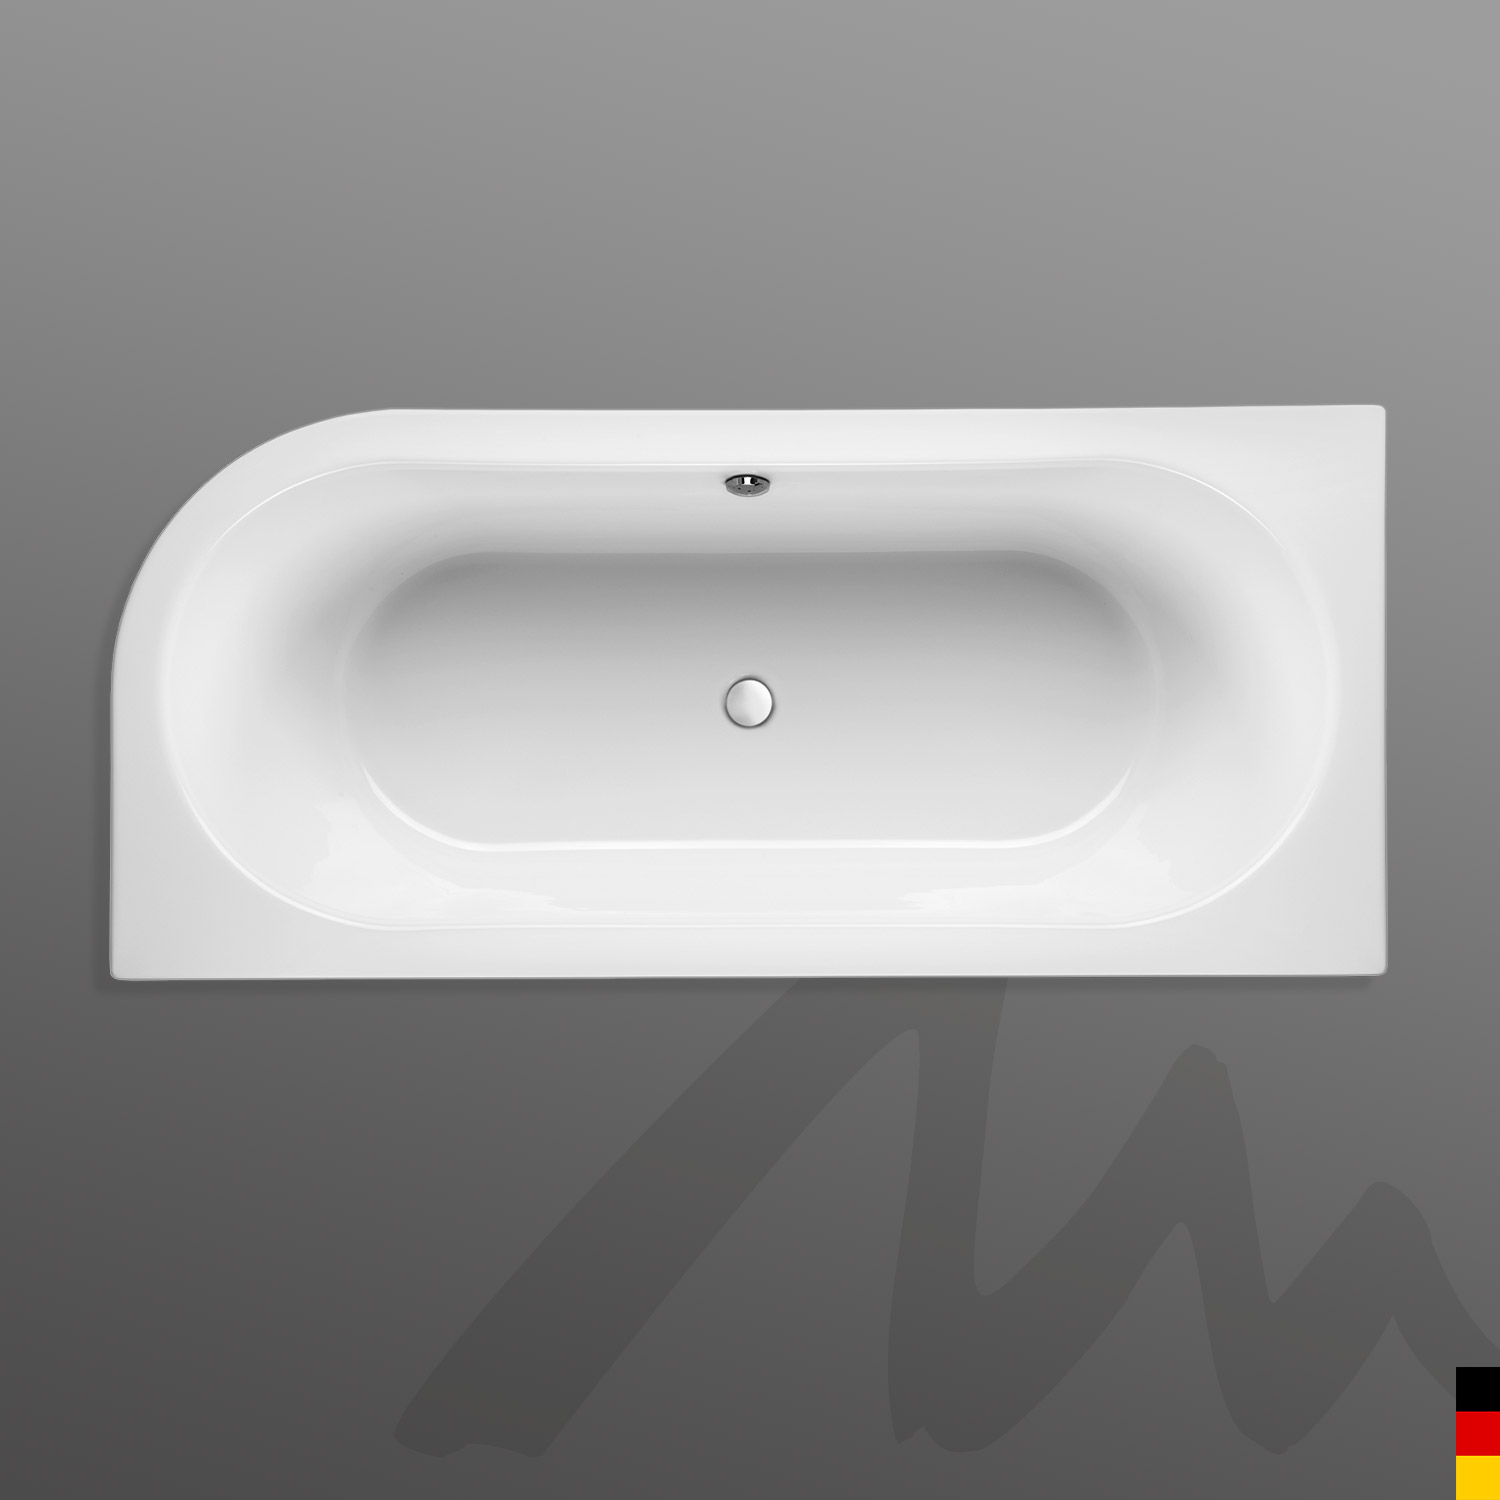 Mauersberger Badewanne Oval Primo 1 - 180/80 uno Ausführung links  180x80x45  Farbgruppe 3